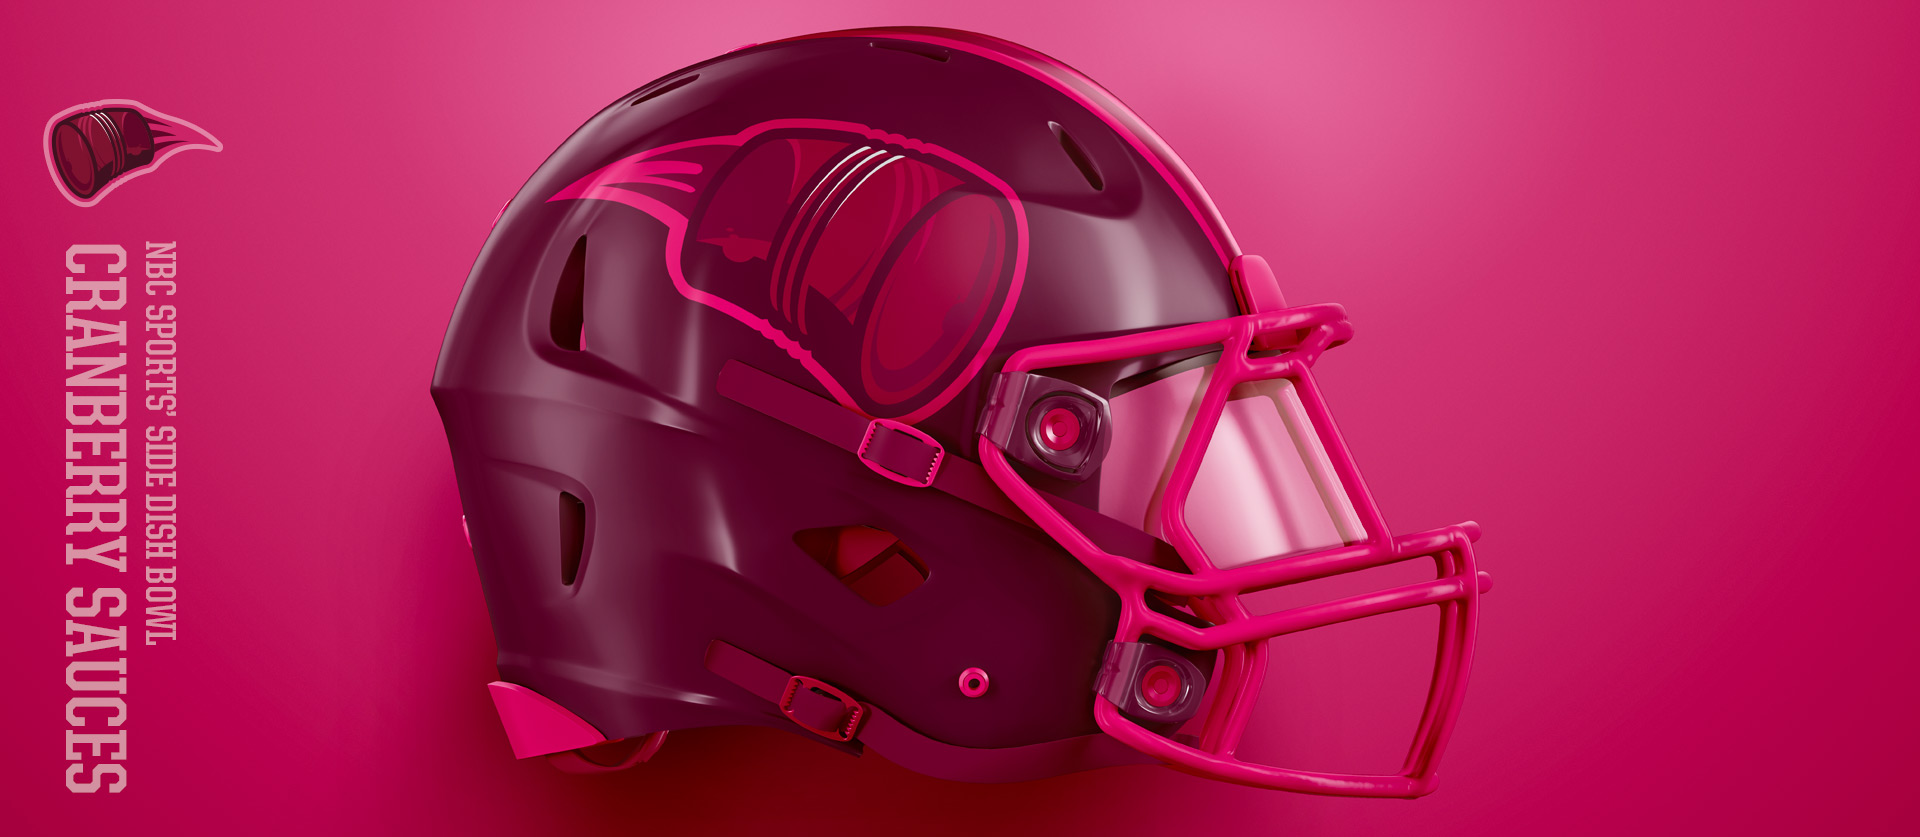 Cranberry Sauces Helmet Side View - Football Uniform Design for NBC Sports Thanksgiving Side Dish Bowl